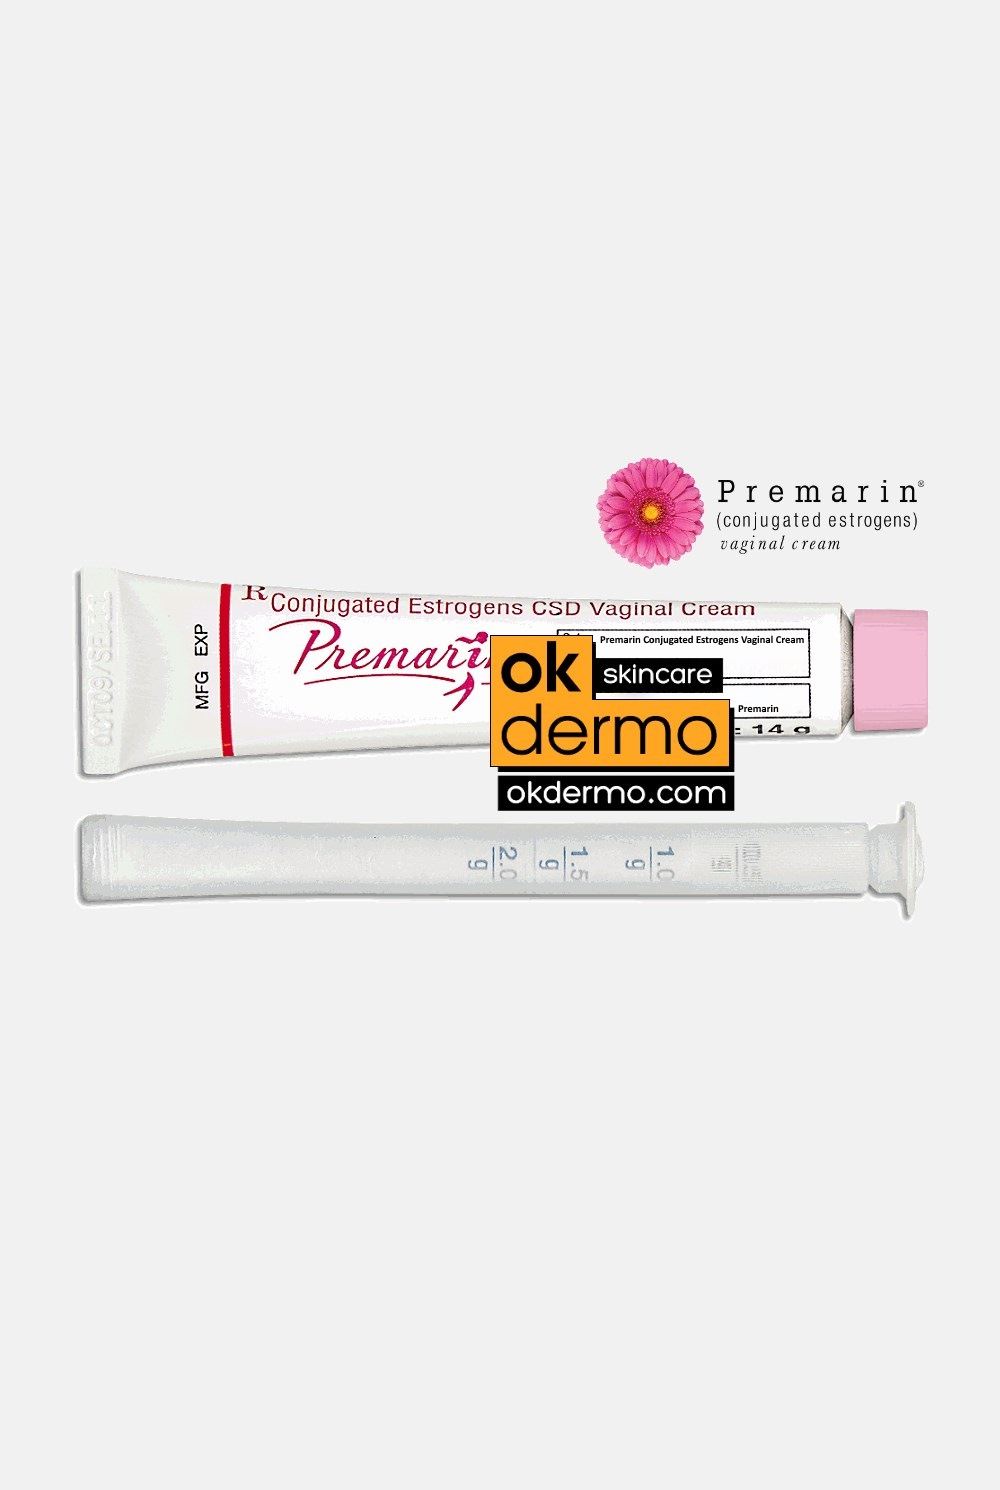 Premarin CONJUGATED ESTROGENS Vaginal Cream Buy Online OTC Without Prescription 14g Okdermo Skin Care Store 1 